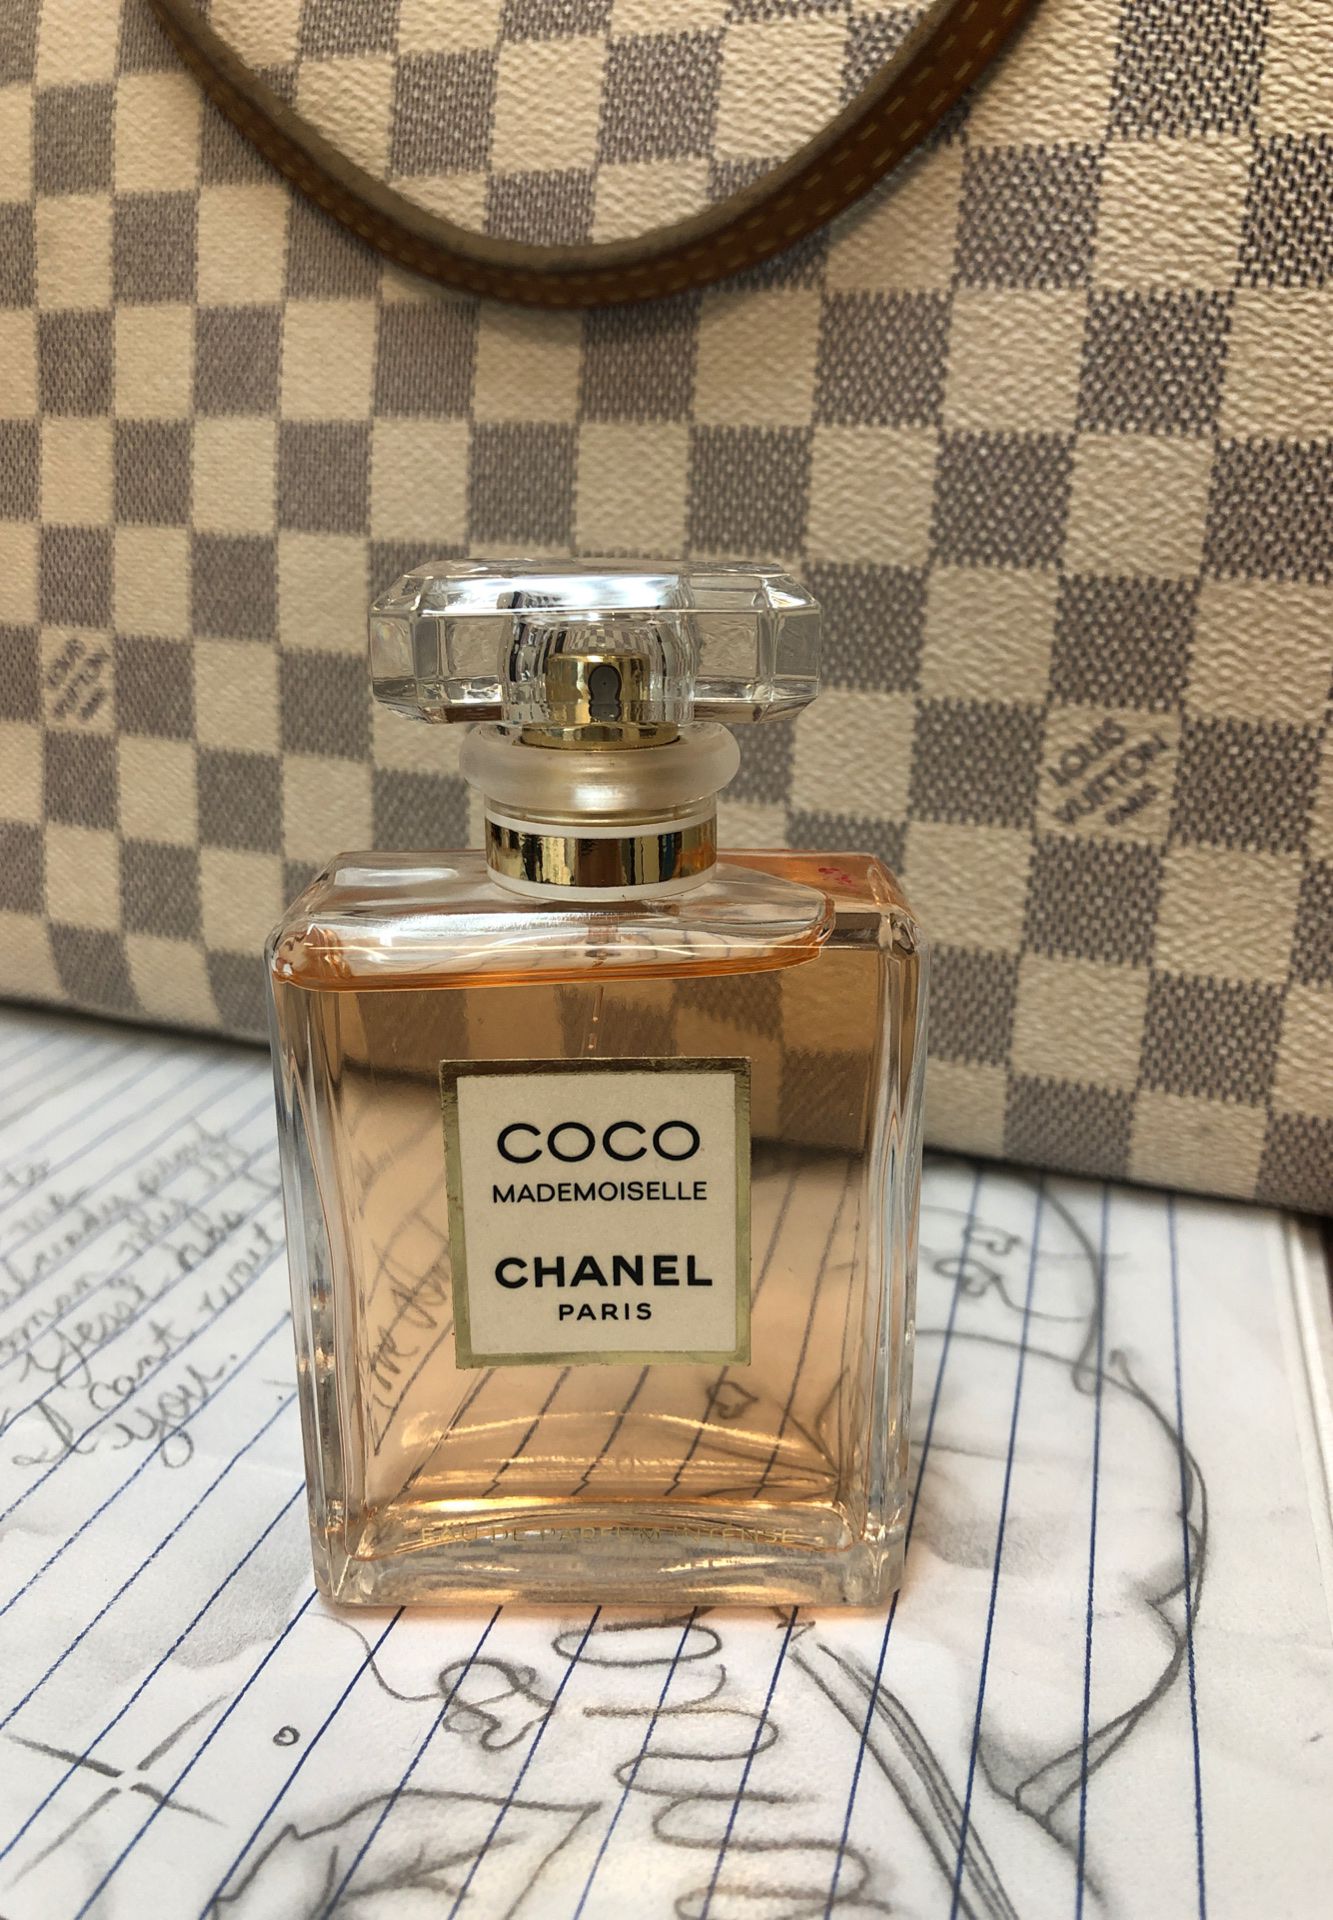 Coco mademoiselle chanel perfume 1.7 fl oz